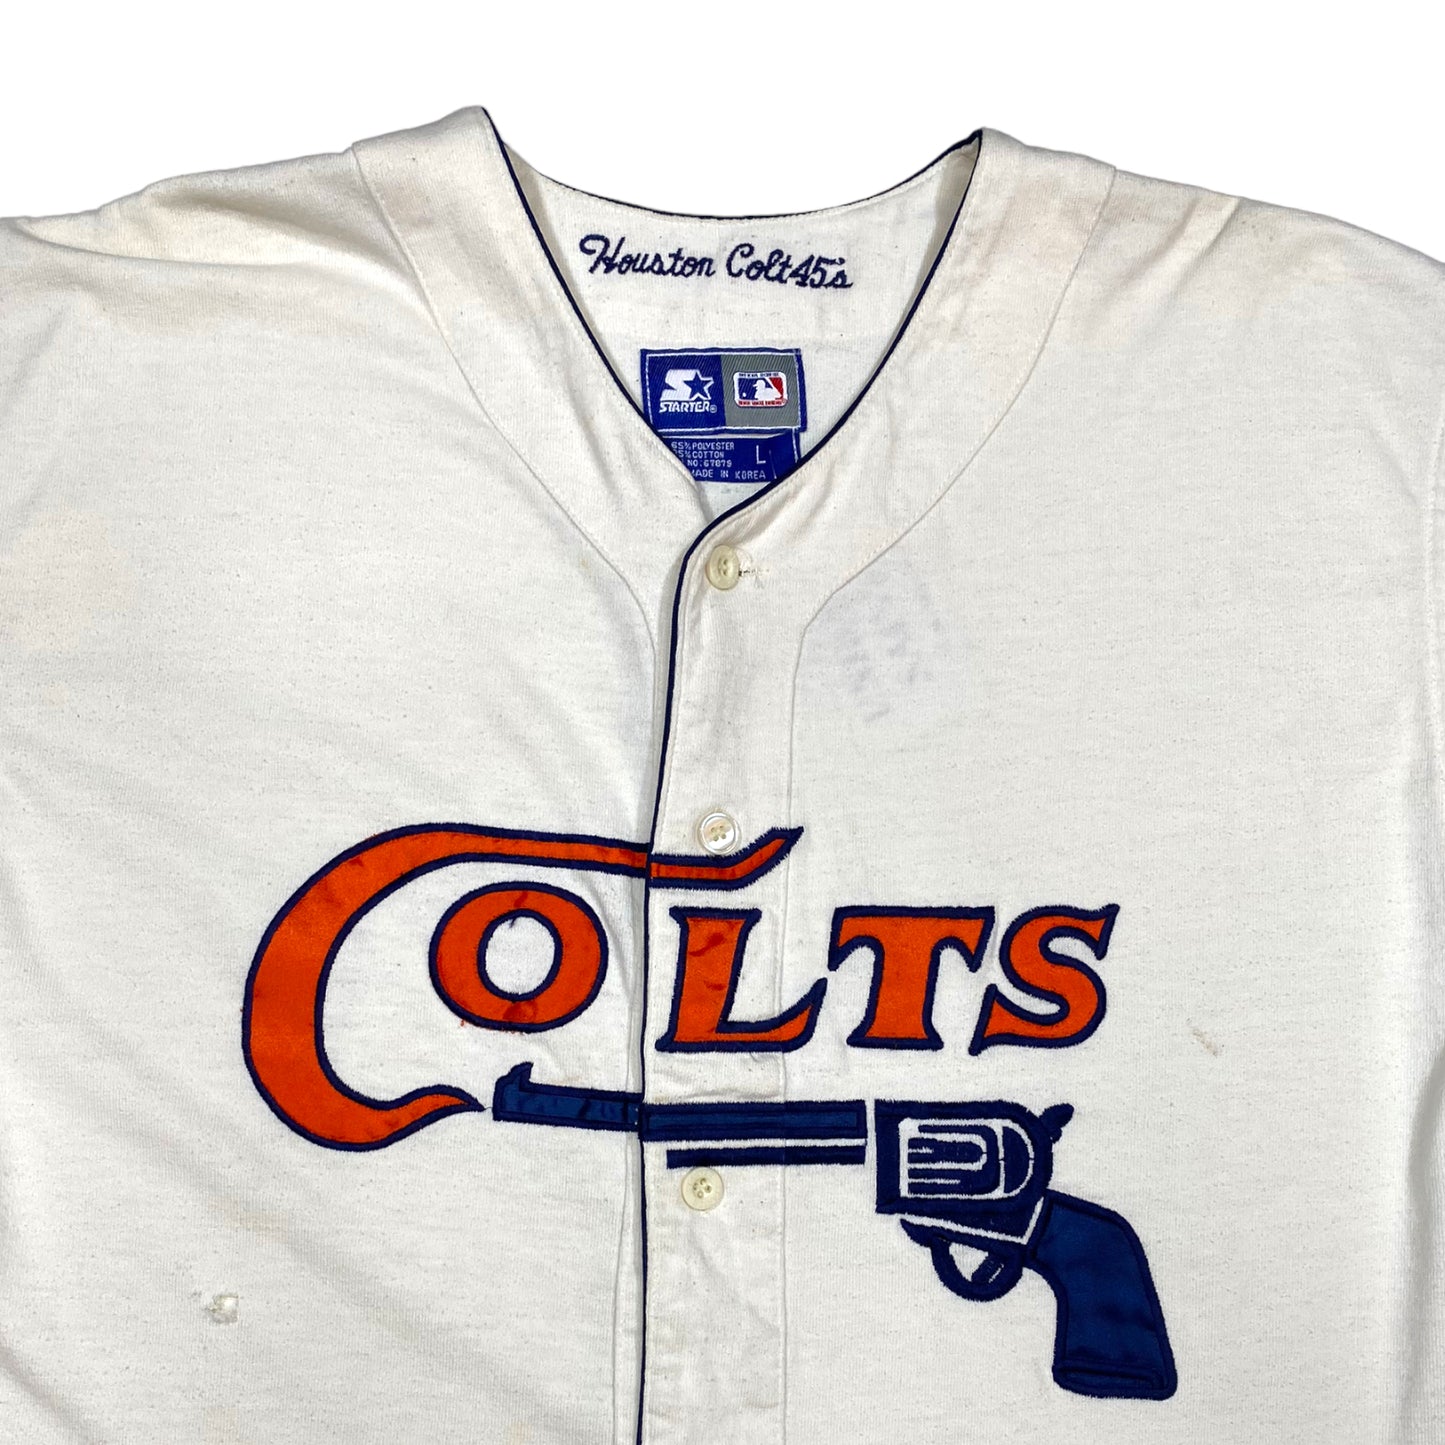 Vintage Houston Colts Baseball Jersey – Unholy Saints